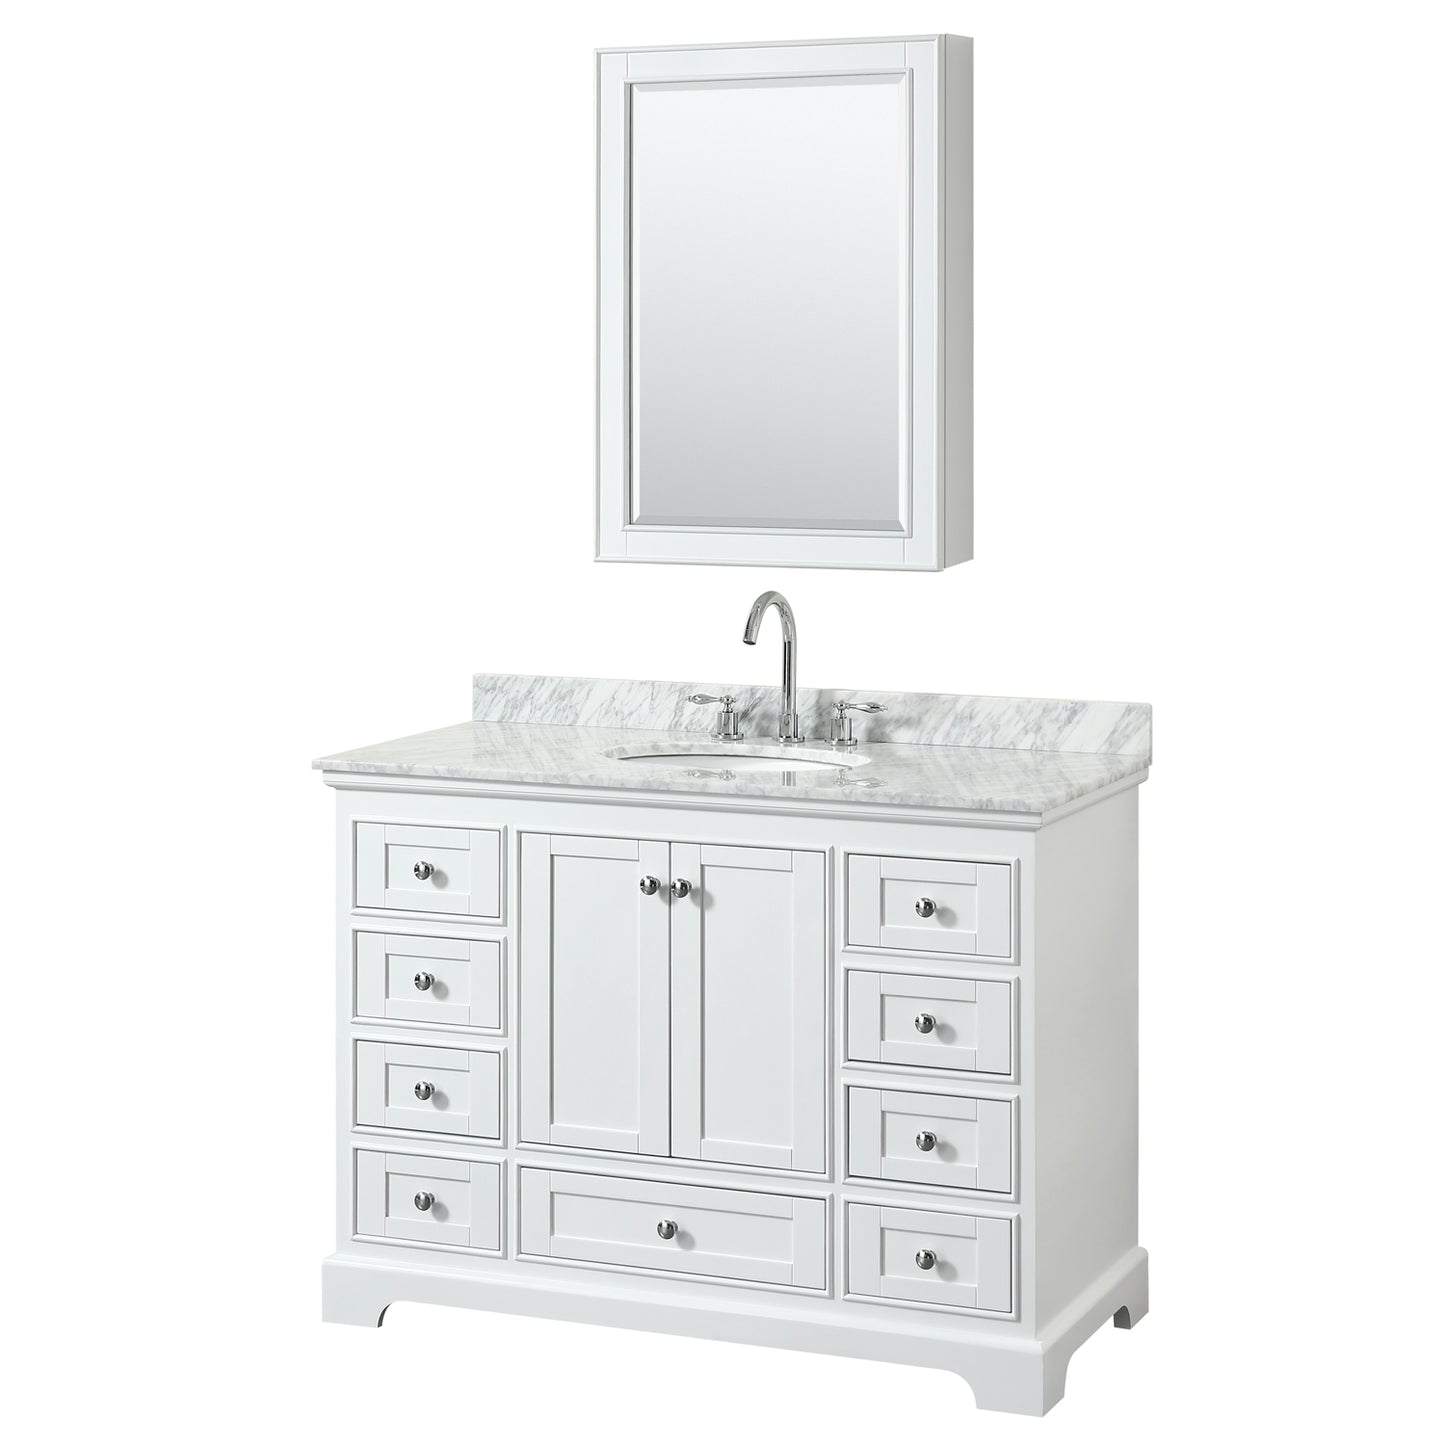 48 Inch Single Bathroom Vanity, White Carrara Marble Countertop, Undermount Square Sink, and Medicine Cabinet - Luxe Bathroom Vanities Luxury Bathroom Fixtures Bathroom Furniture